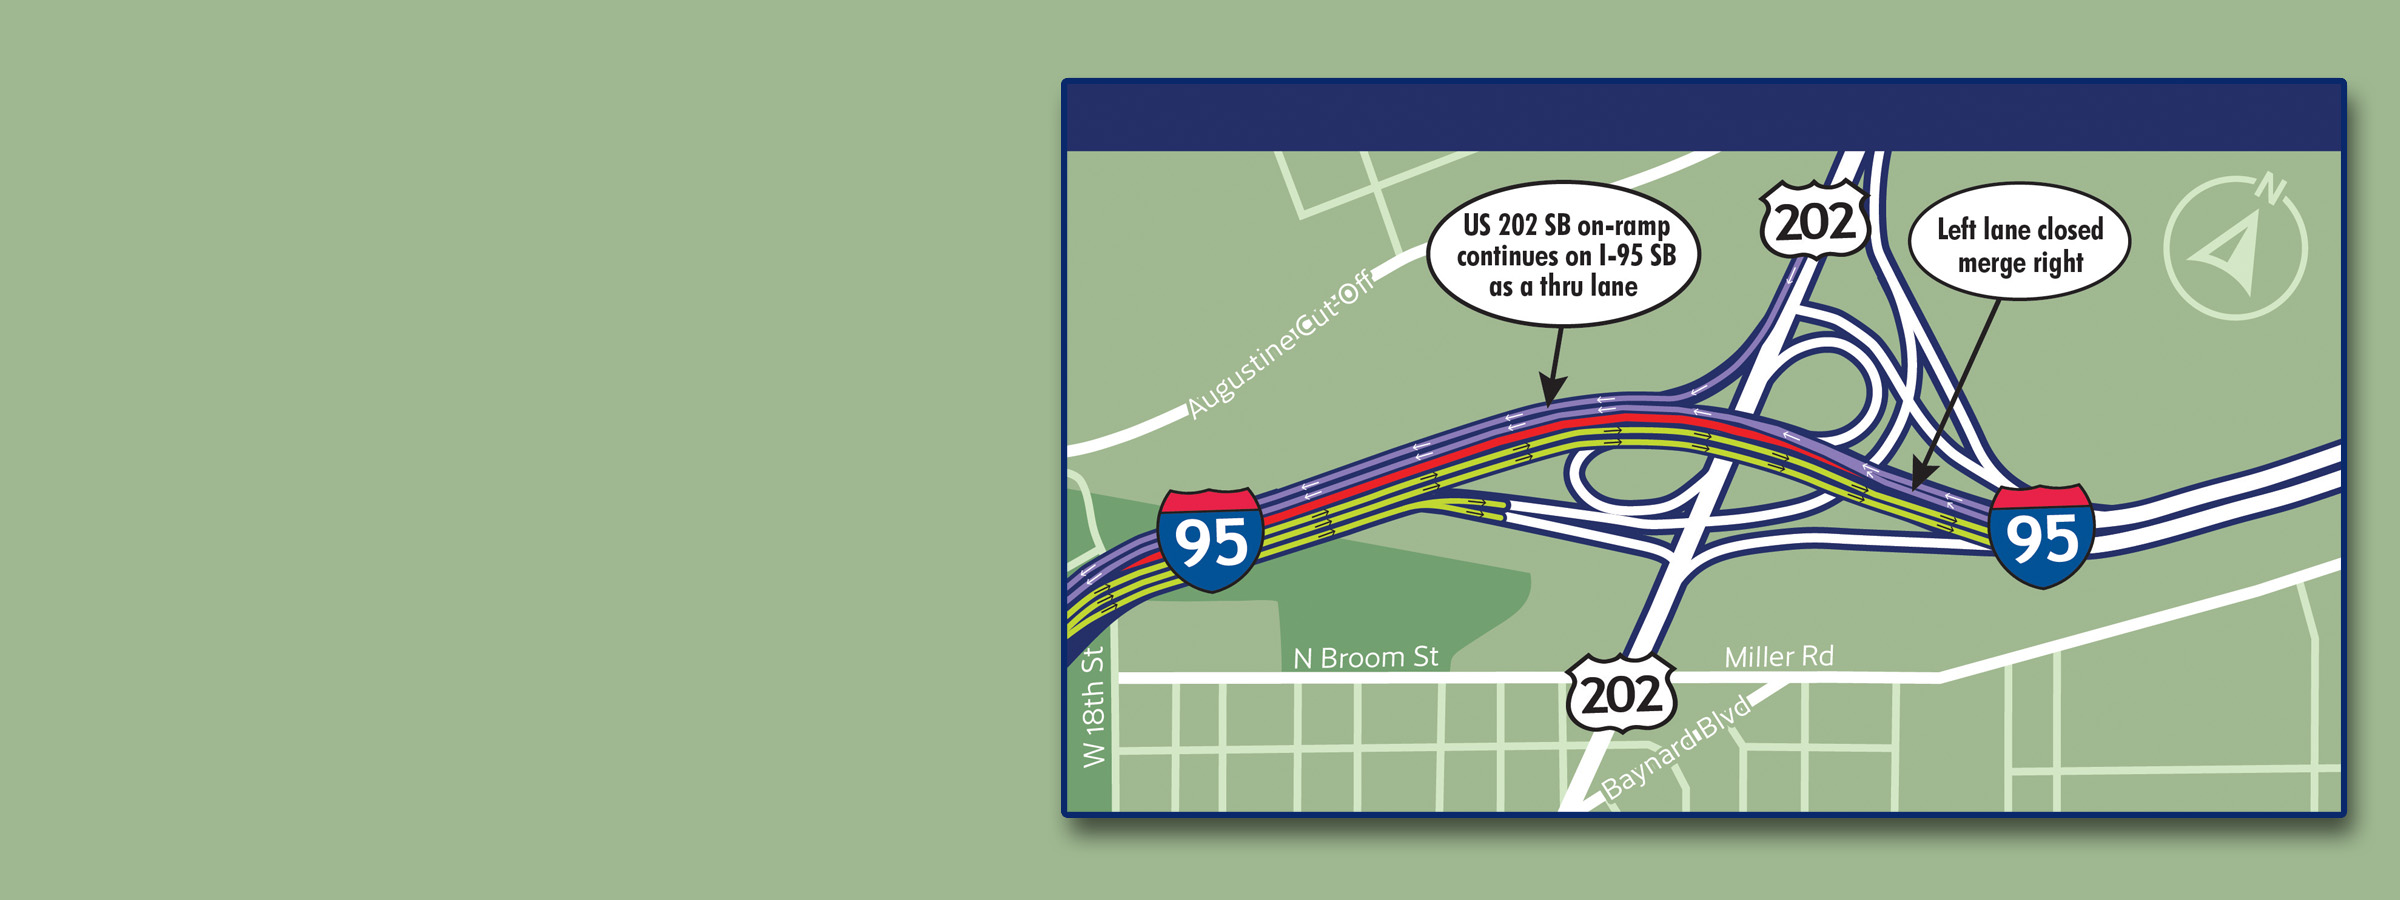 I-95 Traffic Pattern Change Near US 202 Interchange 